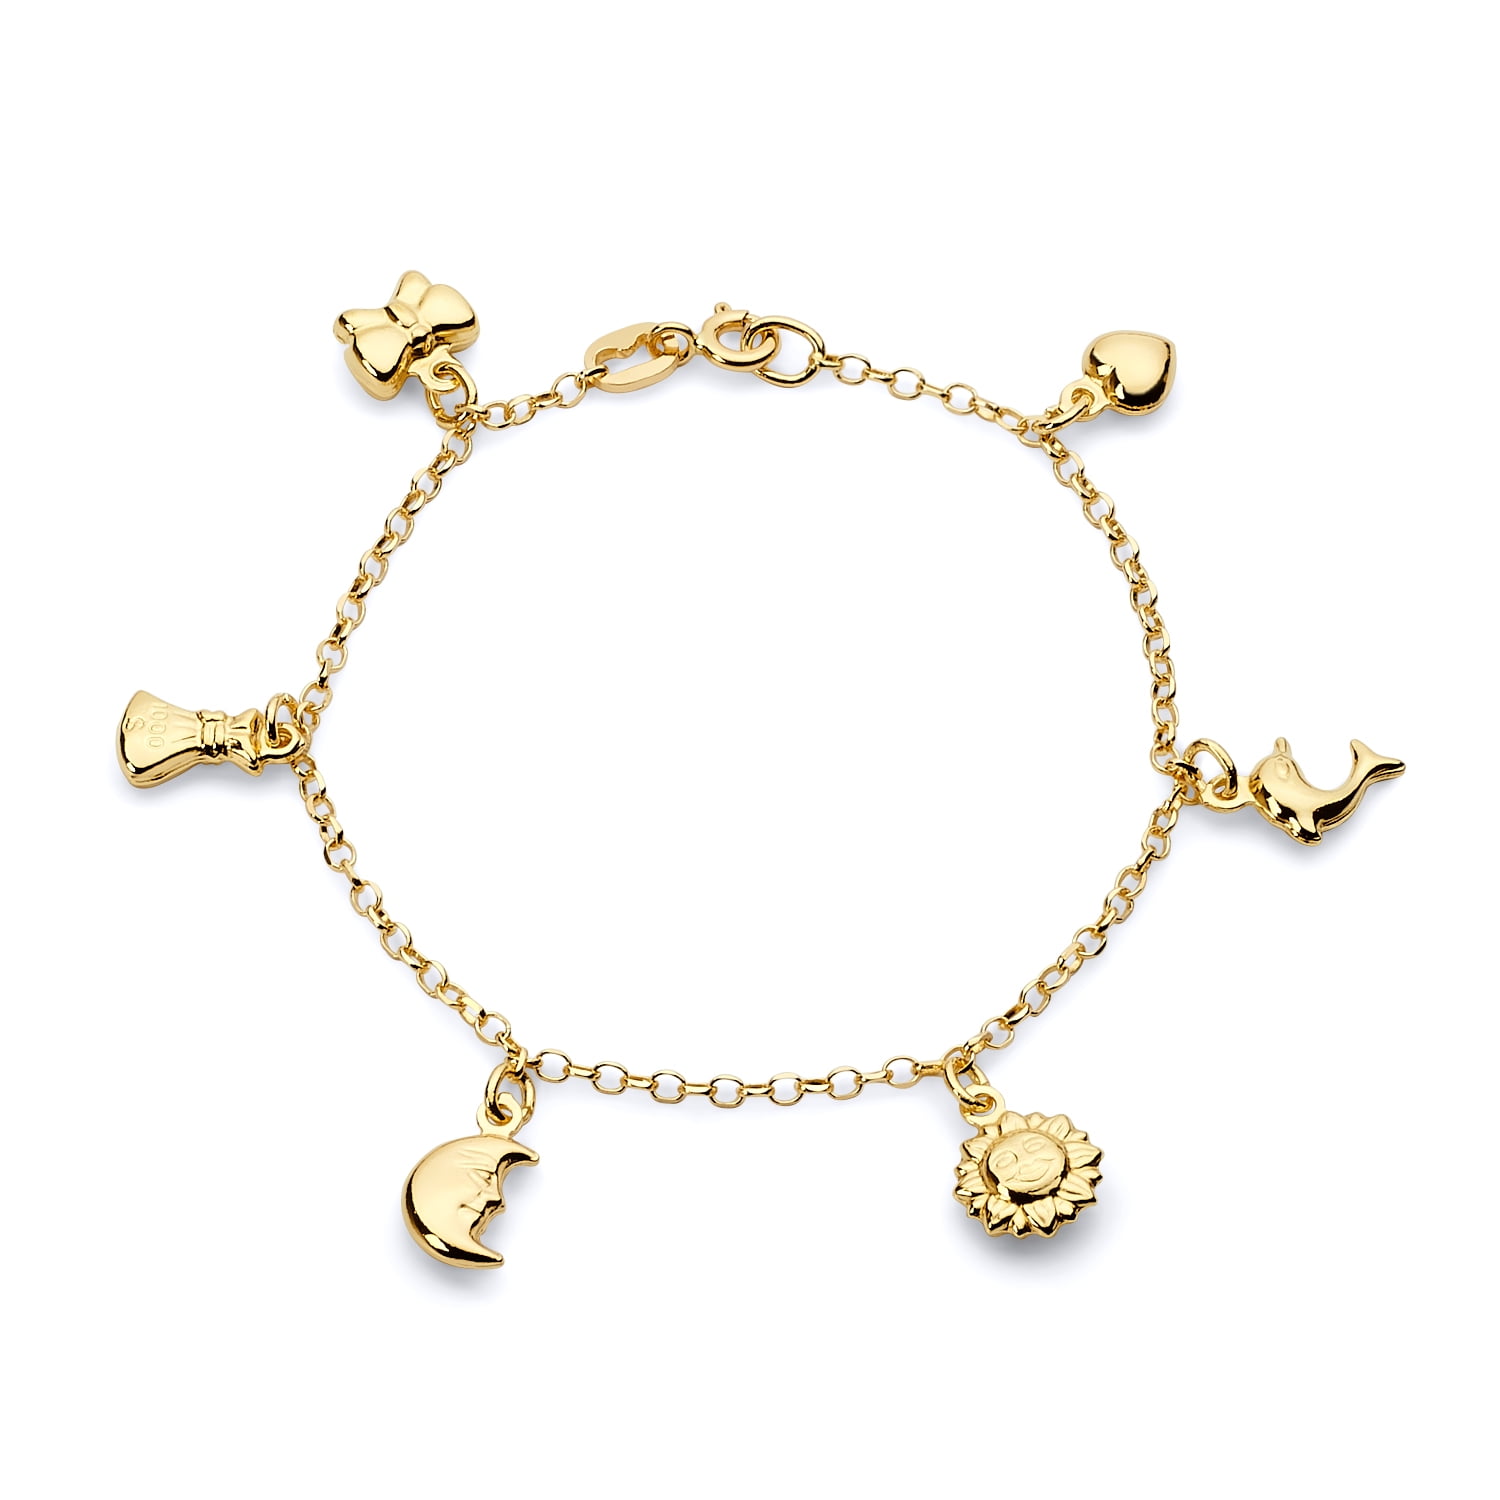 Beautiful Female Golden Wrist Bracelet Hanging Stock Photo 1060261817 |  Shutterstock